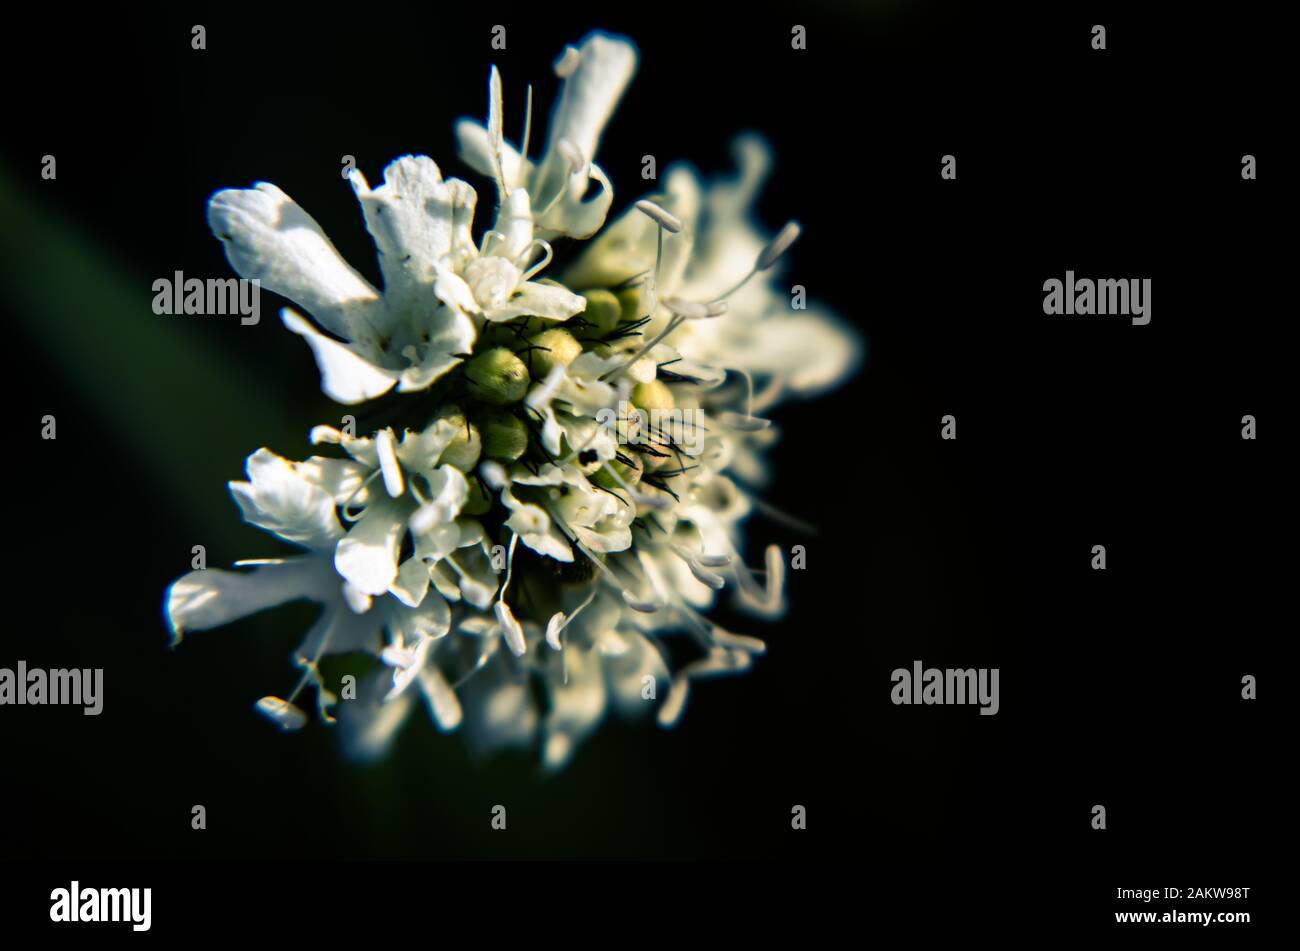 White flower photograph with dark background. Stock Photo